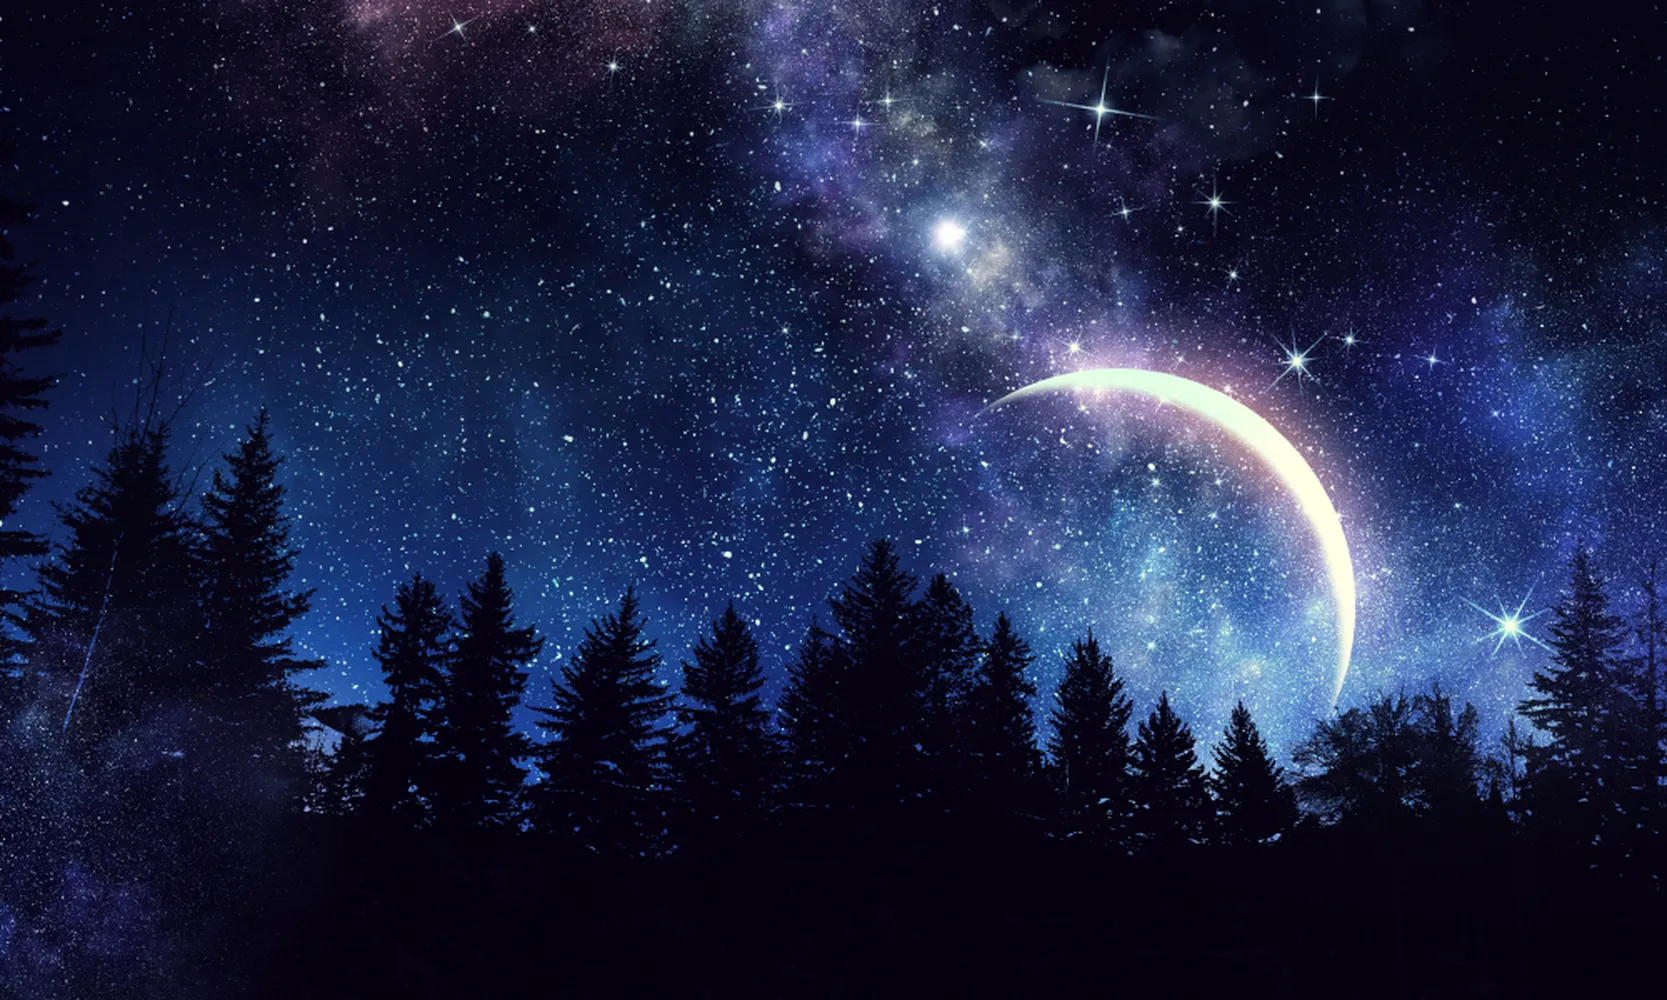 کاغذ دیواری کهکشان طرح آسمان جنگل در شب